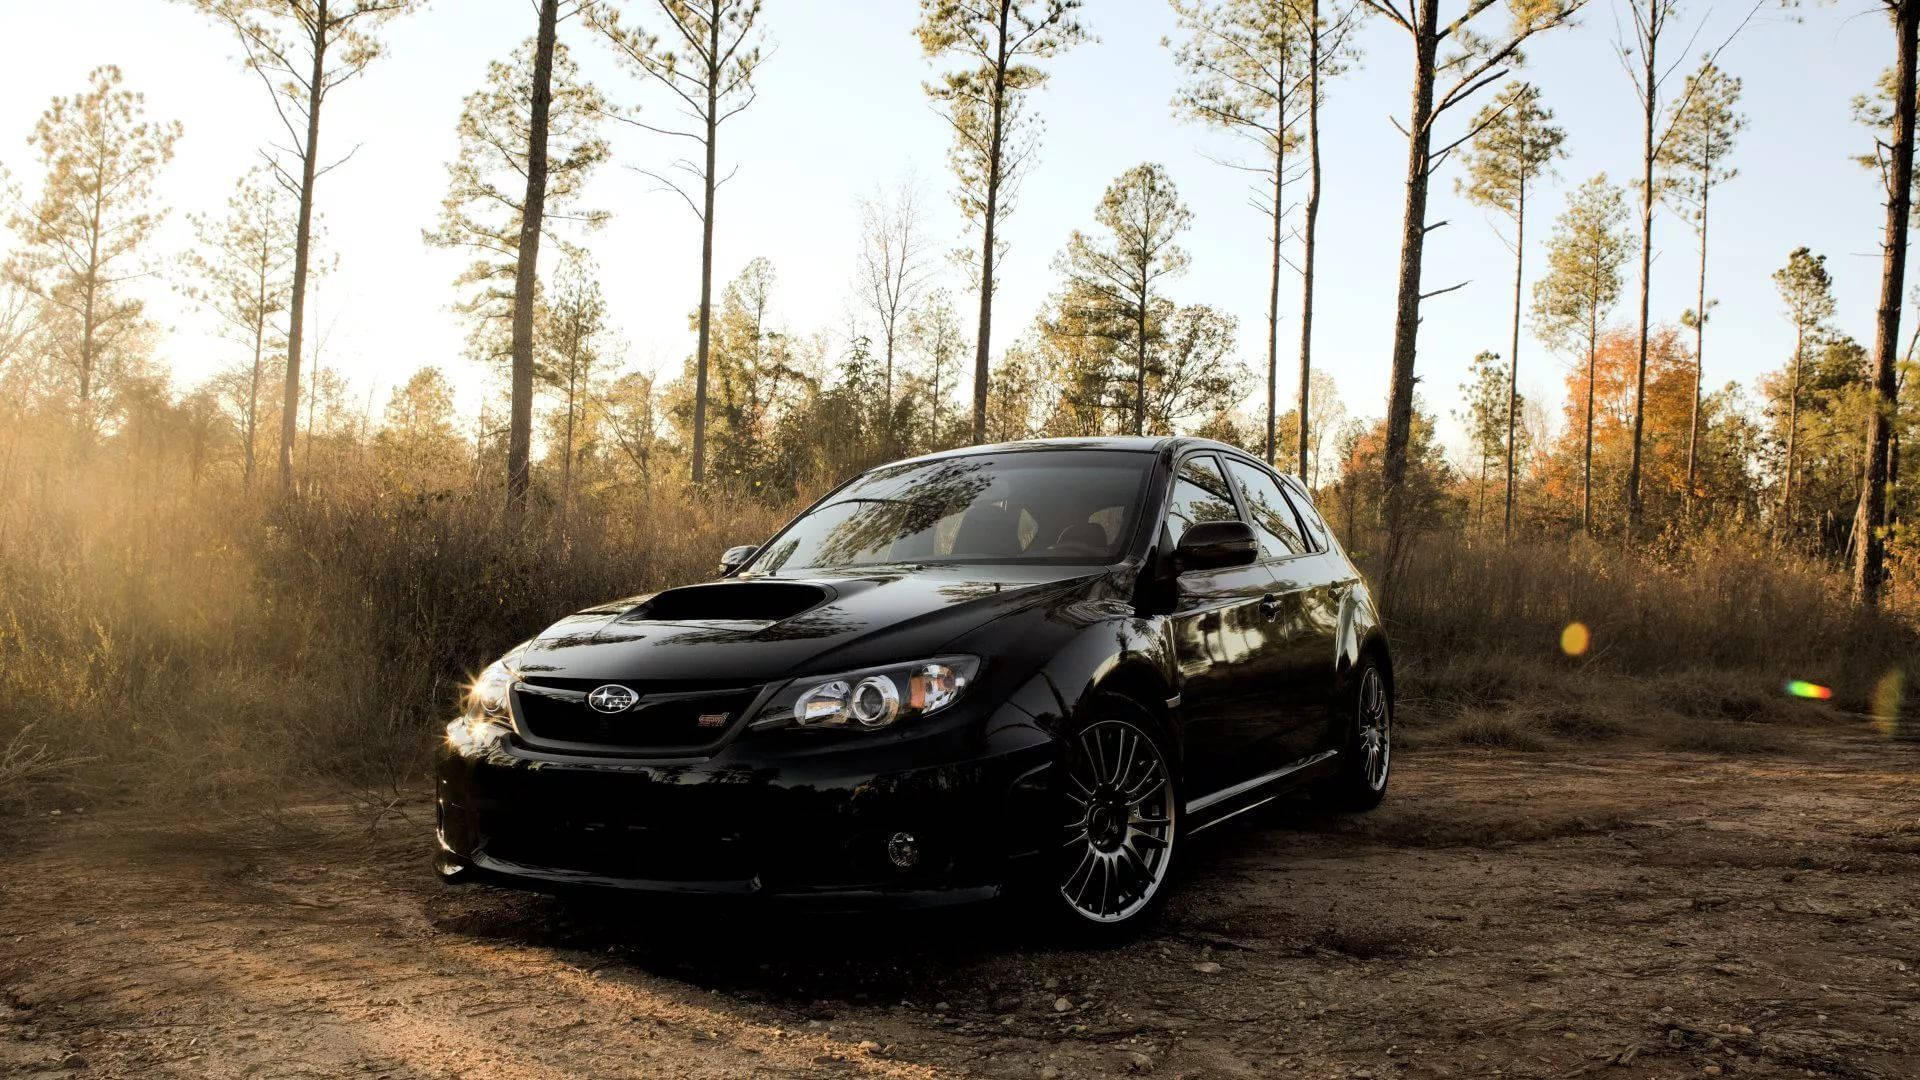 Subaru Impreza In The Woods Background